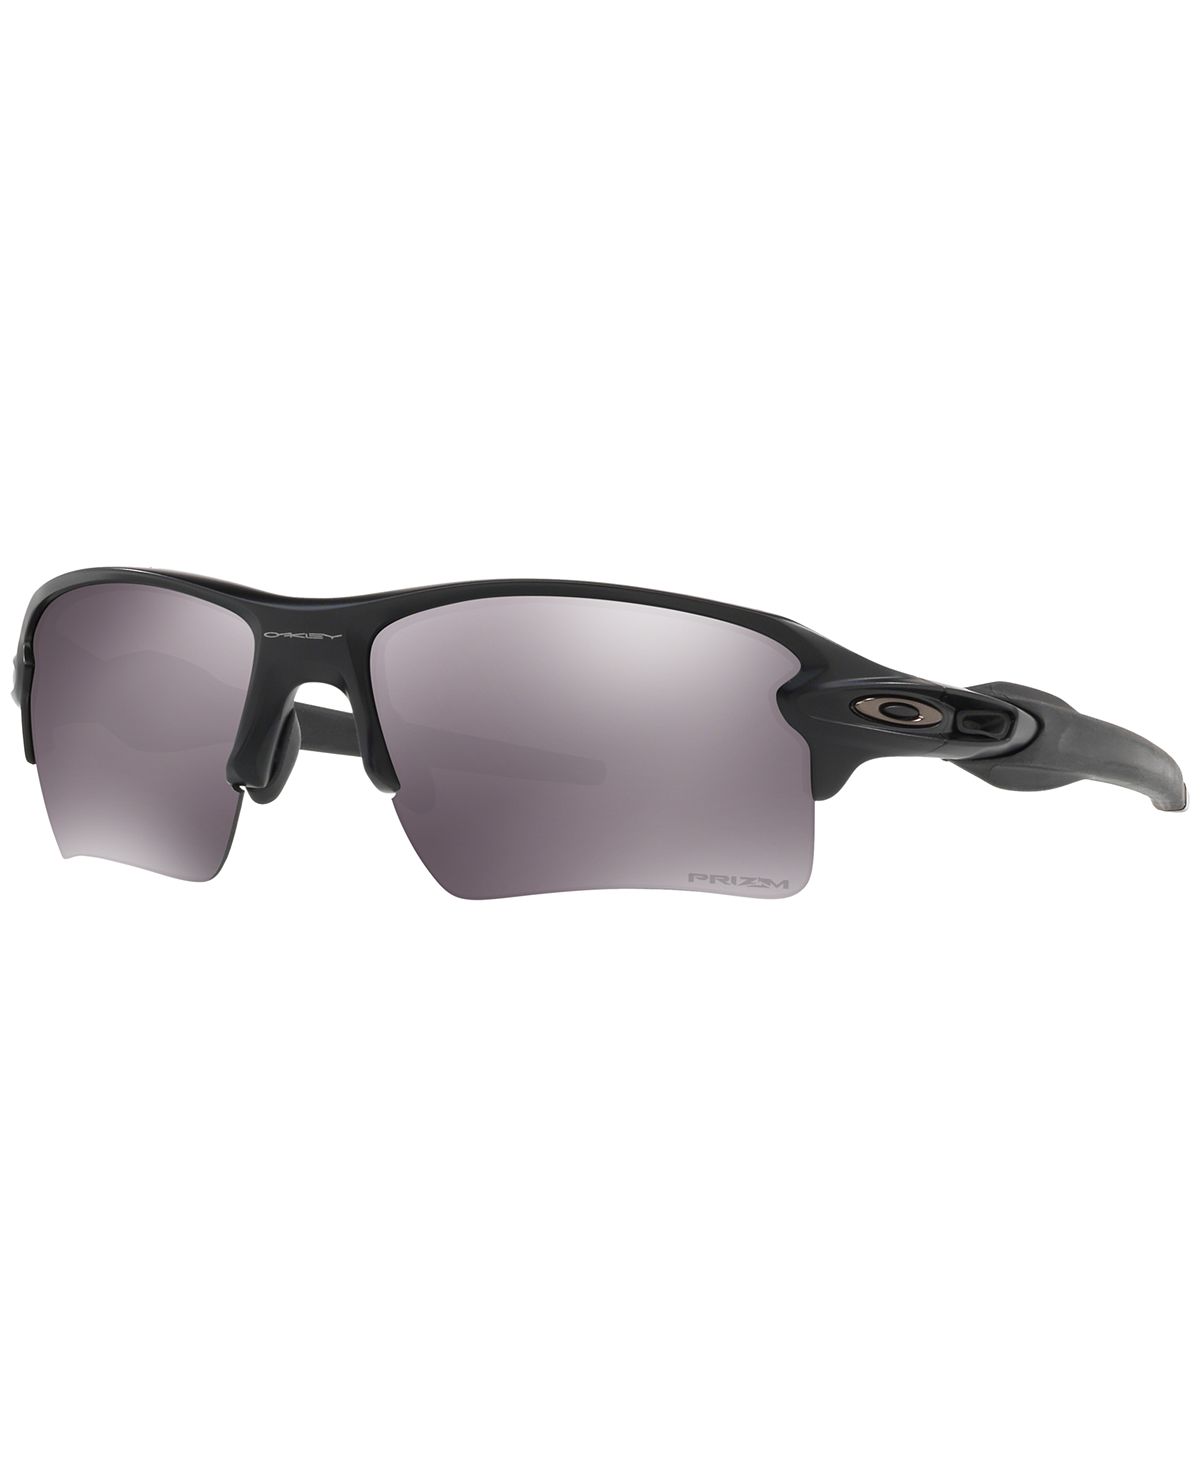 Солнцезащитные очки FLAK 2 XL OO9188 Oakley pfi 302mbk matte black 300 мл 2215b001